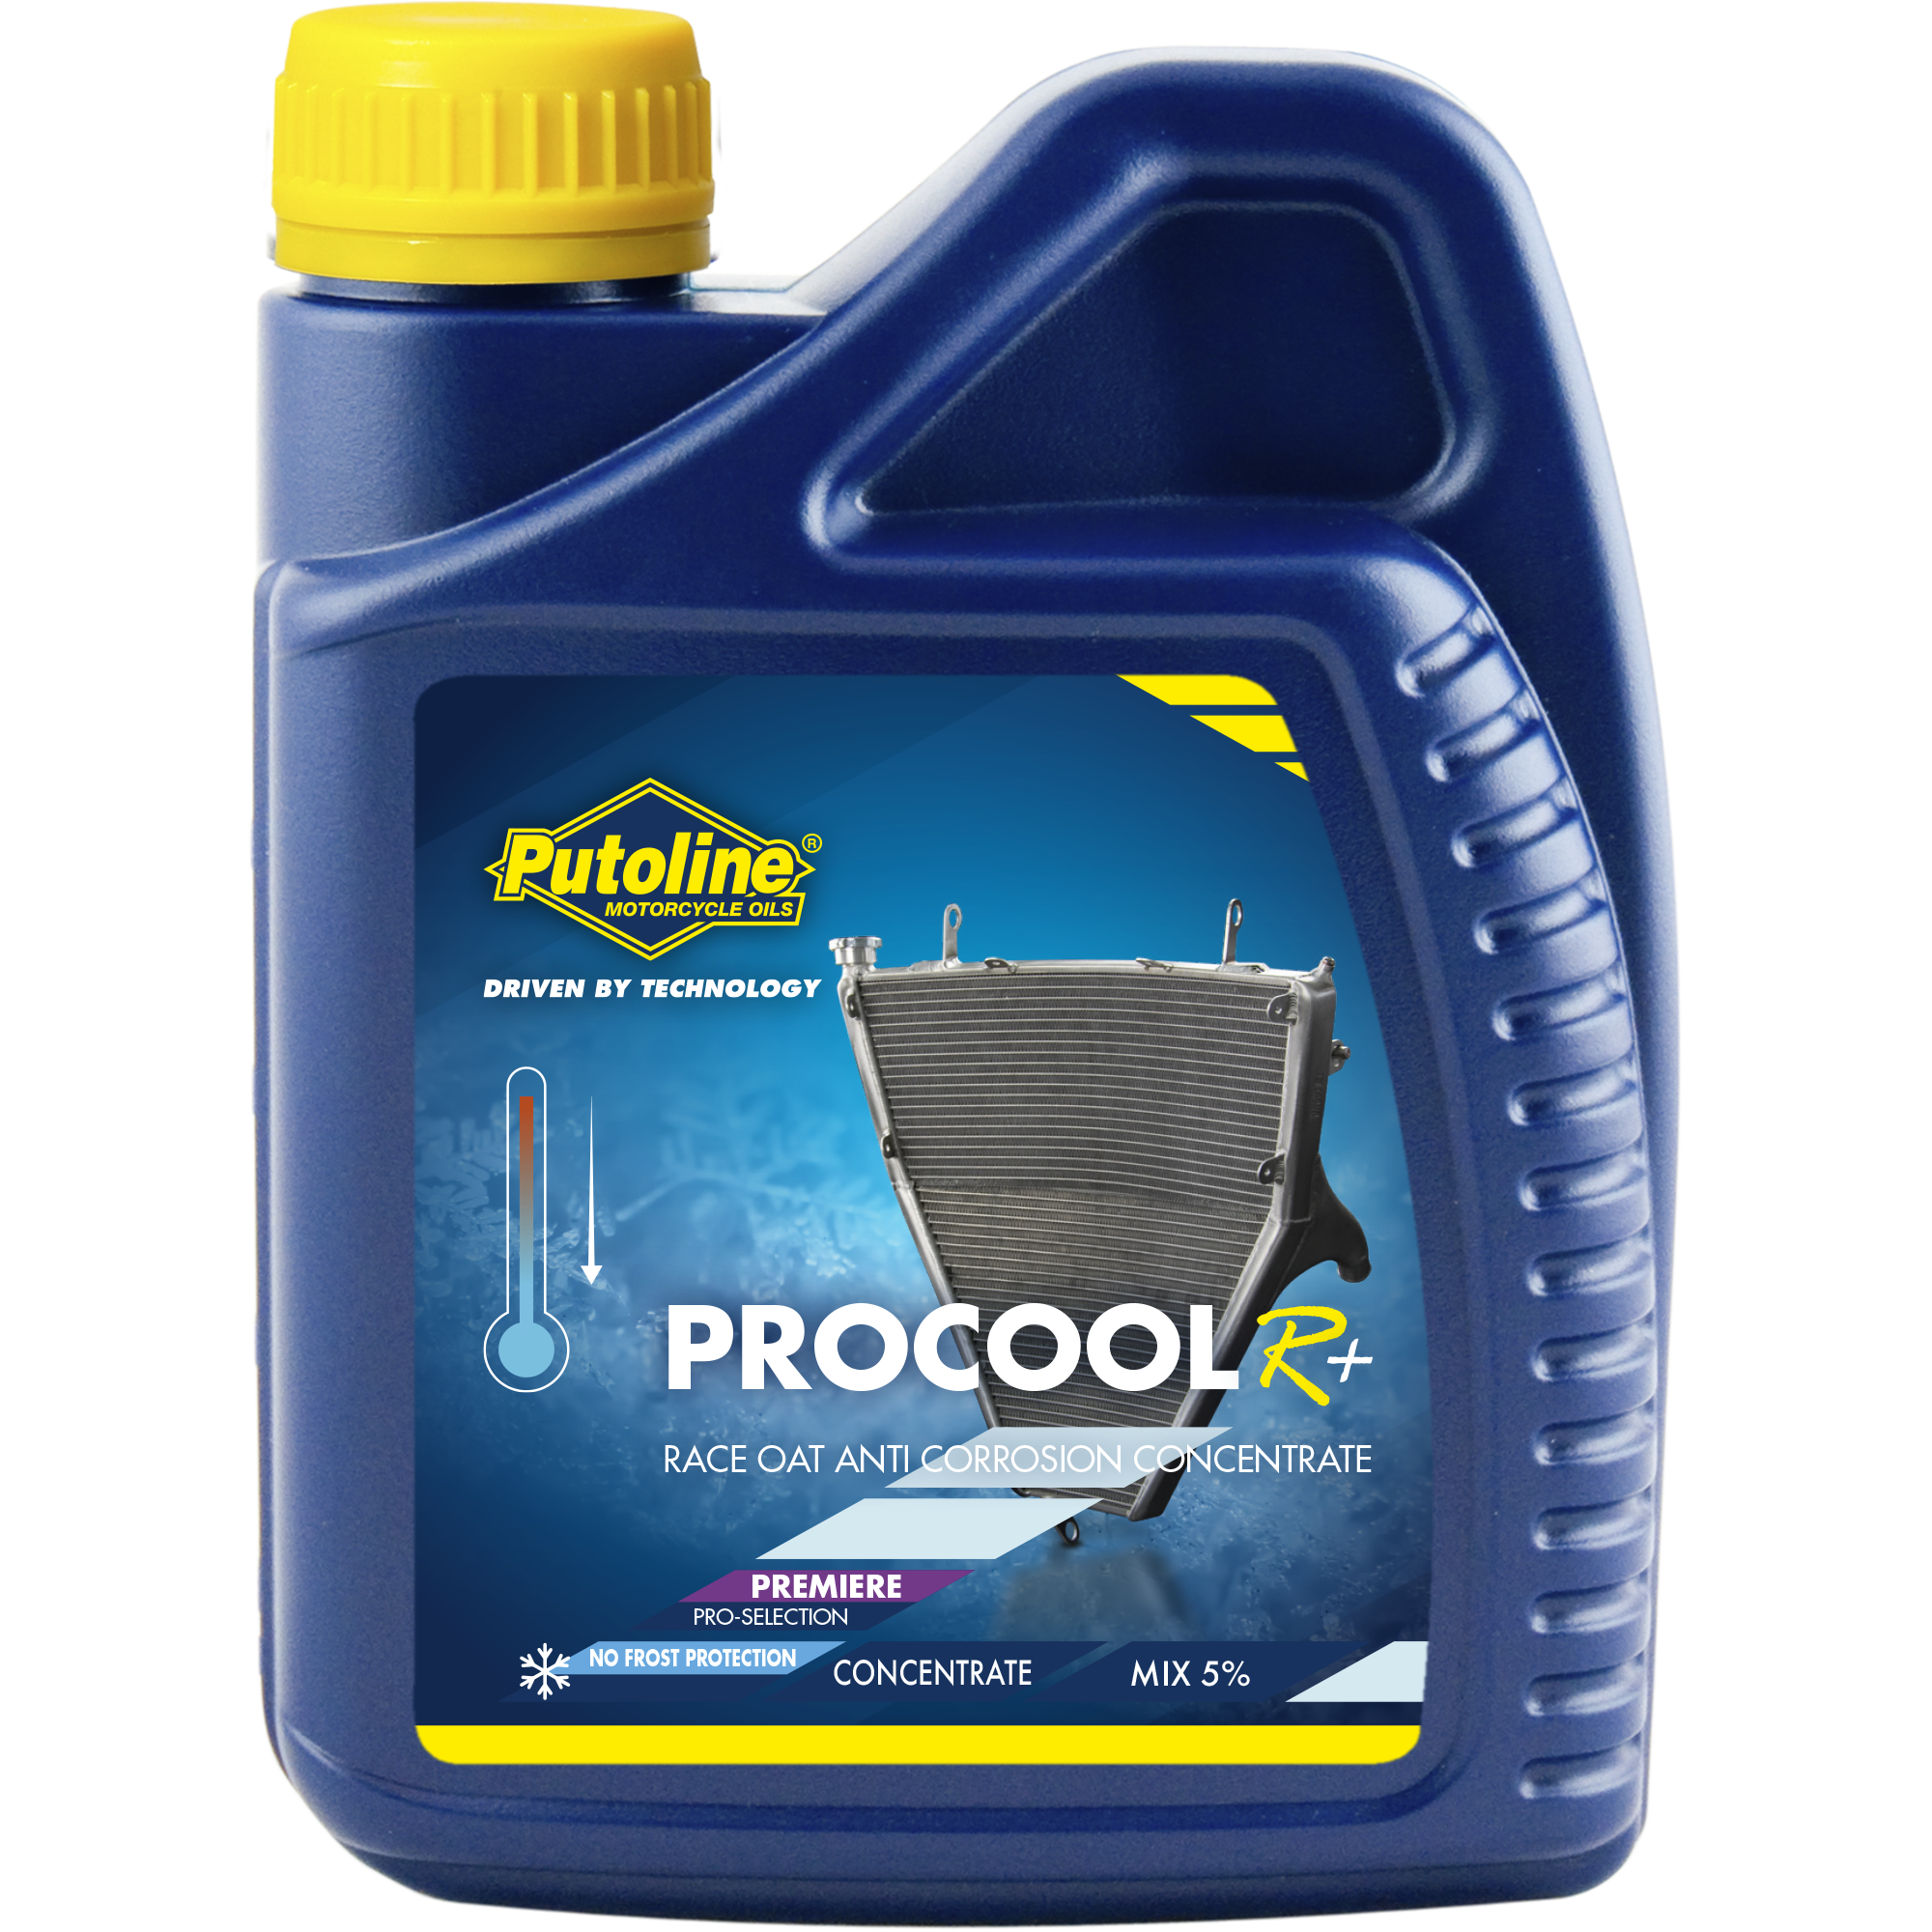 Putoline Procool R+, 500 ml